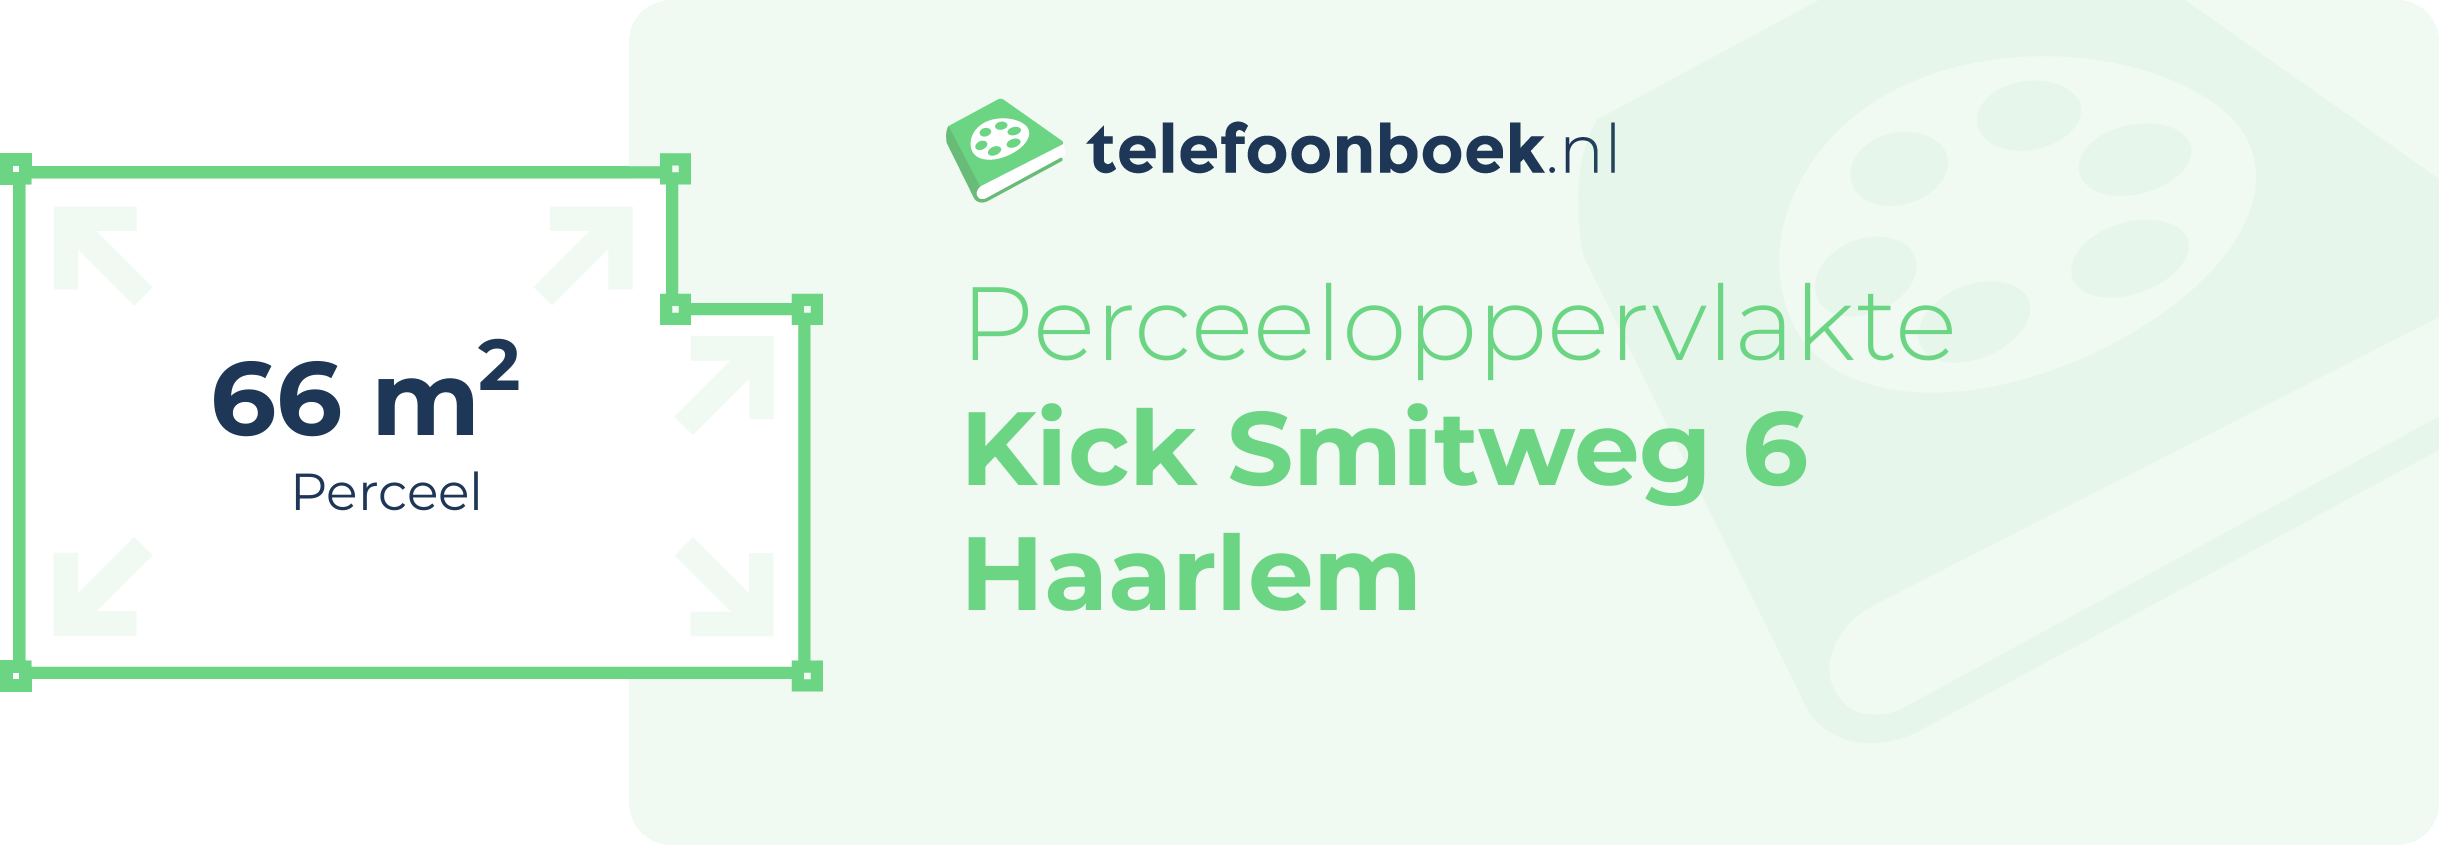 Perceeloppervlakte Kick Smitweg 6 Haarlem